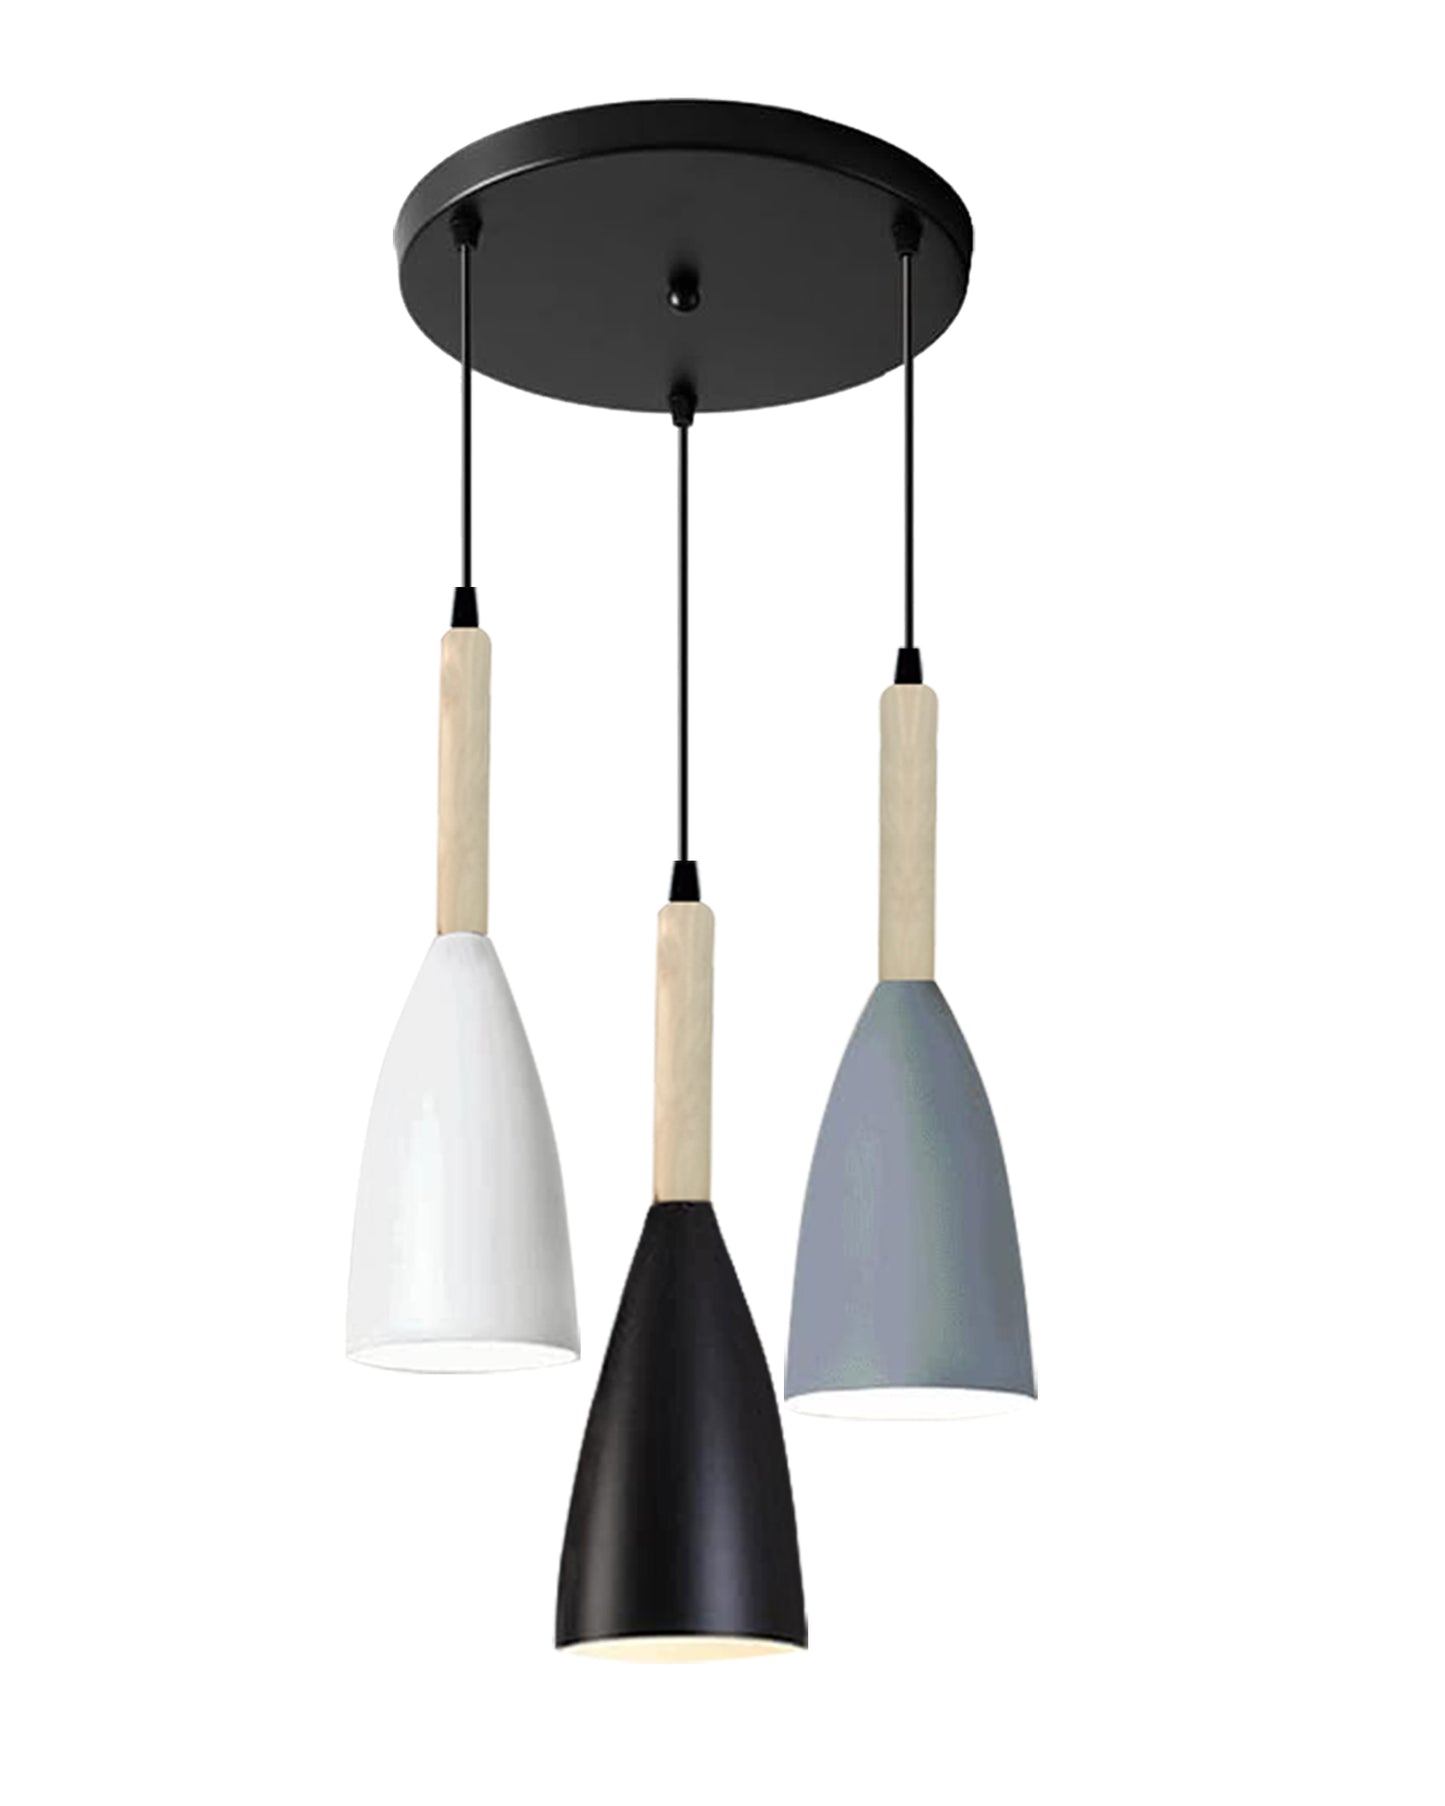 Pendant Lamp Shade for Kitchen Island, Color Metal Minimal Pot Pendant Light Shades, Nordic Wood Bedroom, Living Room, Multi Bottle Guard